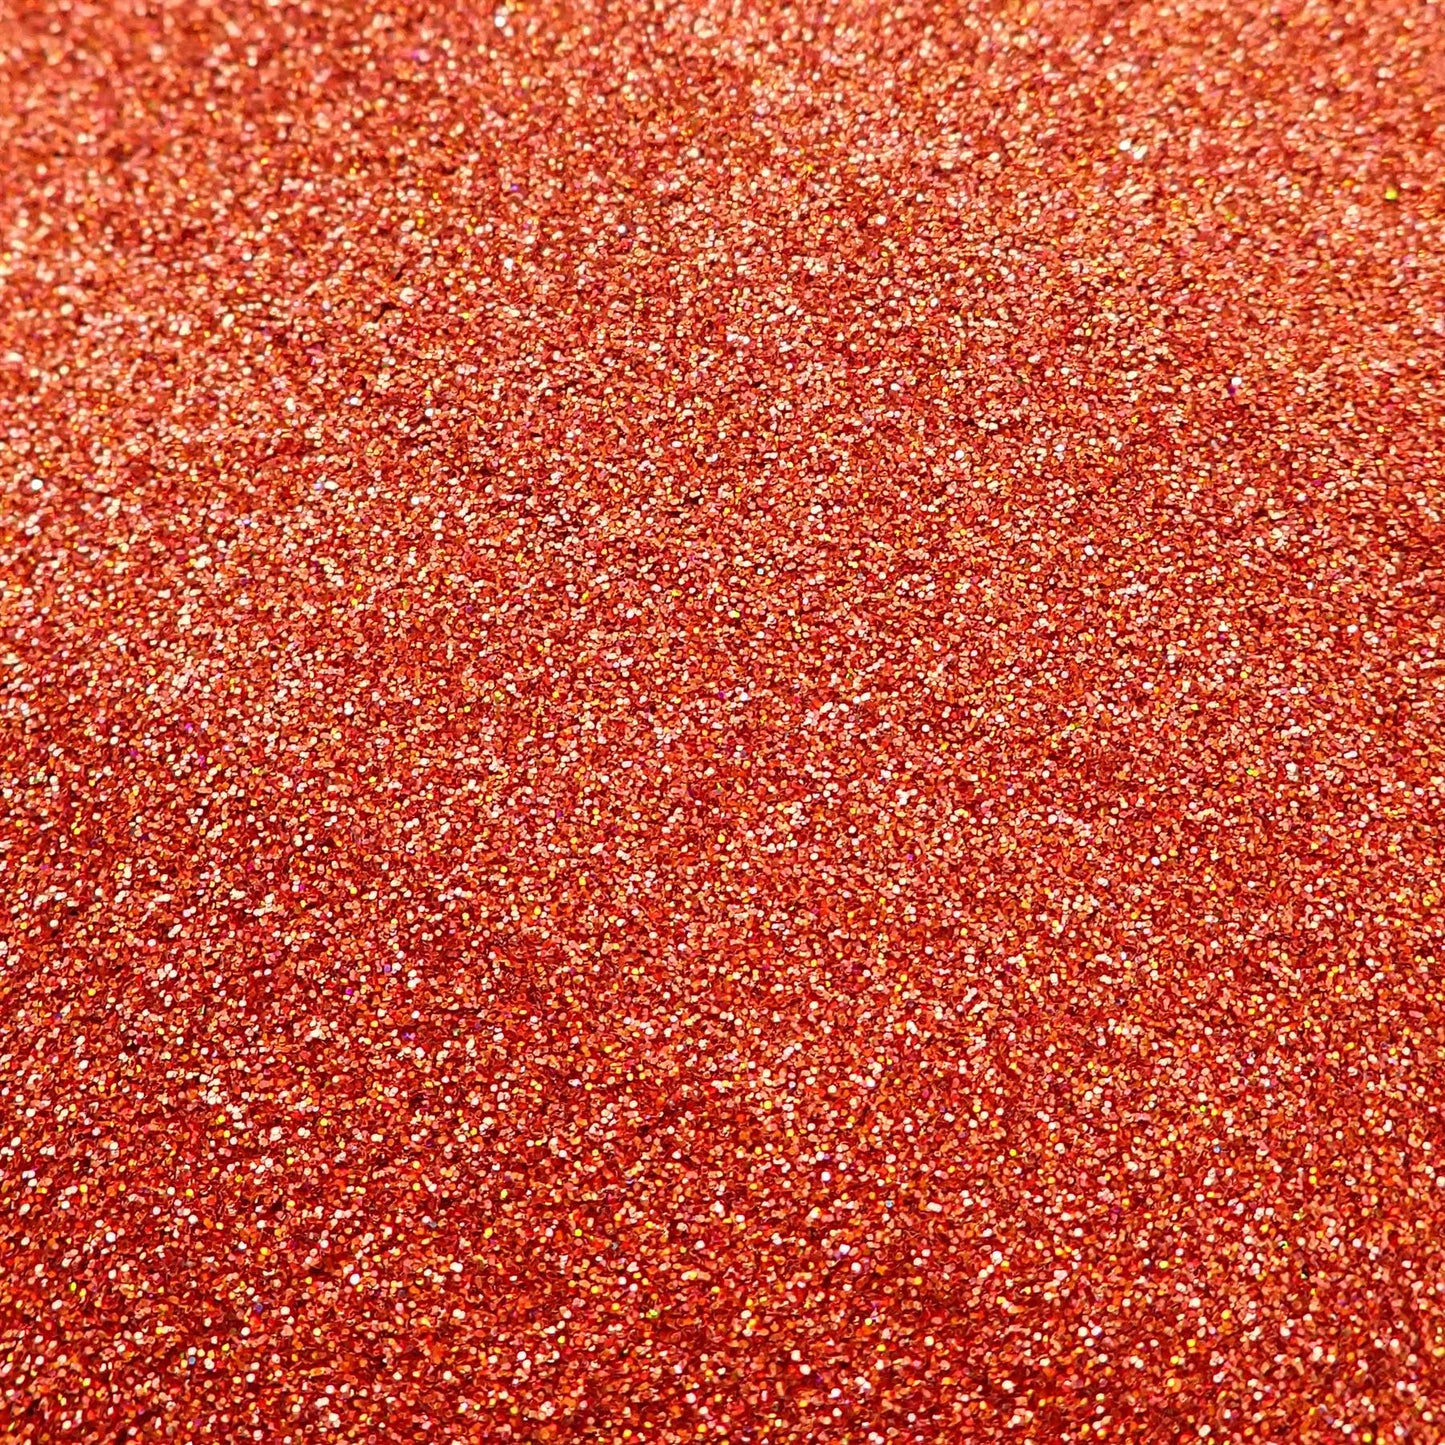 dartfords Orange Holographic Glitter Flake 100g 0.008